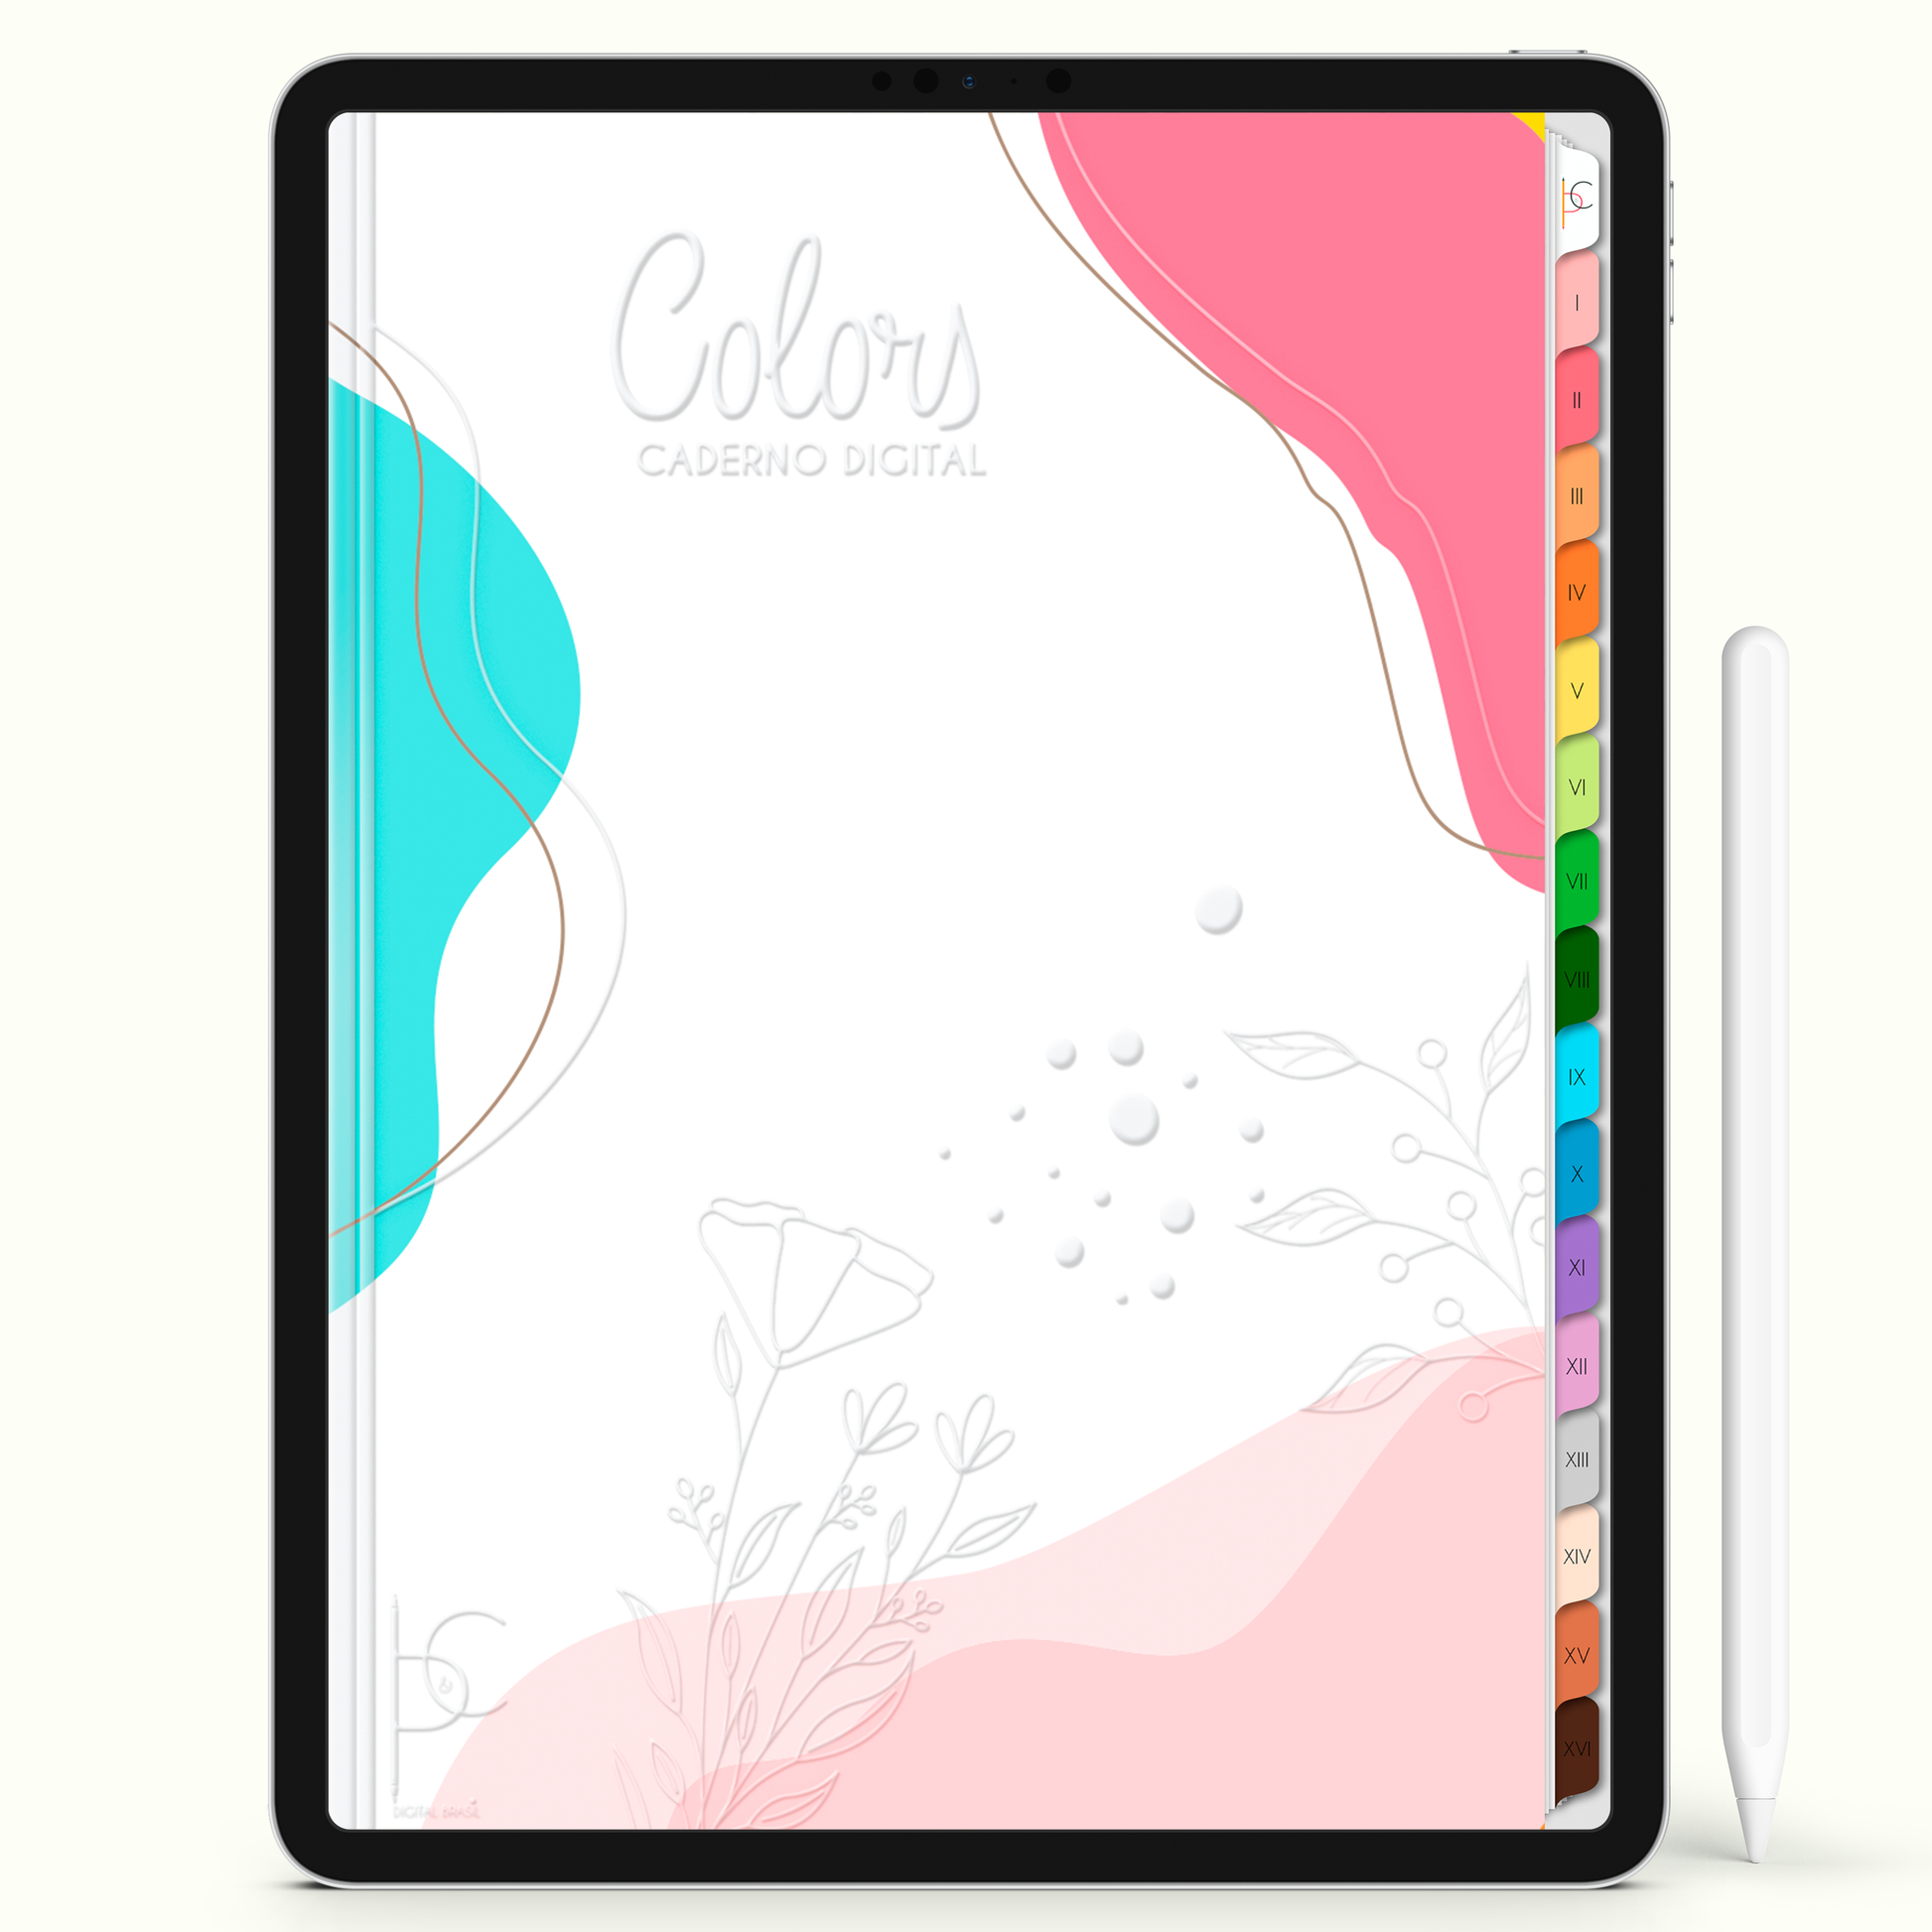 Caderno Digital Colors Belos Resumos 16 Matérias • Para iPad e Tablet Android • Download instantâneo • Sustentável